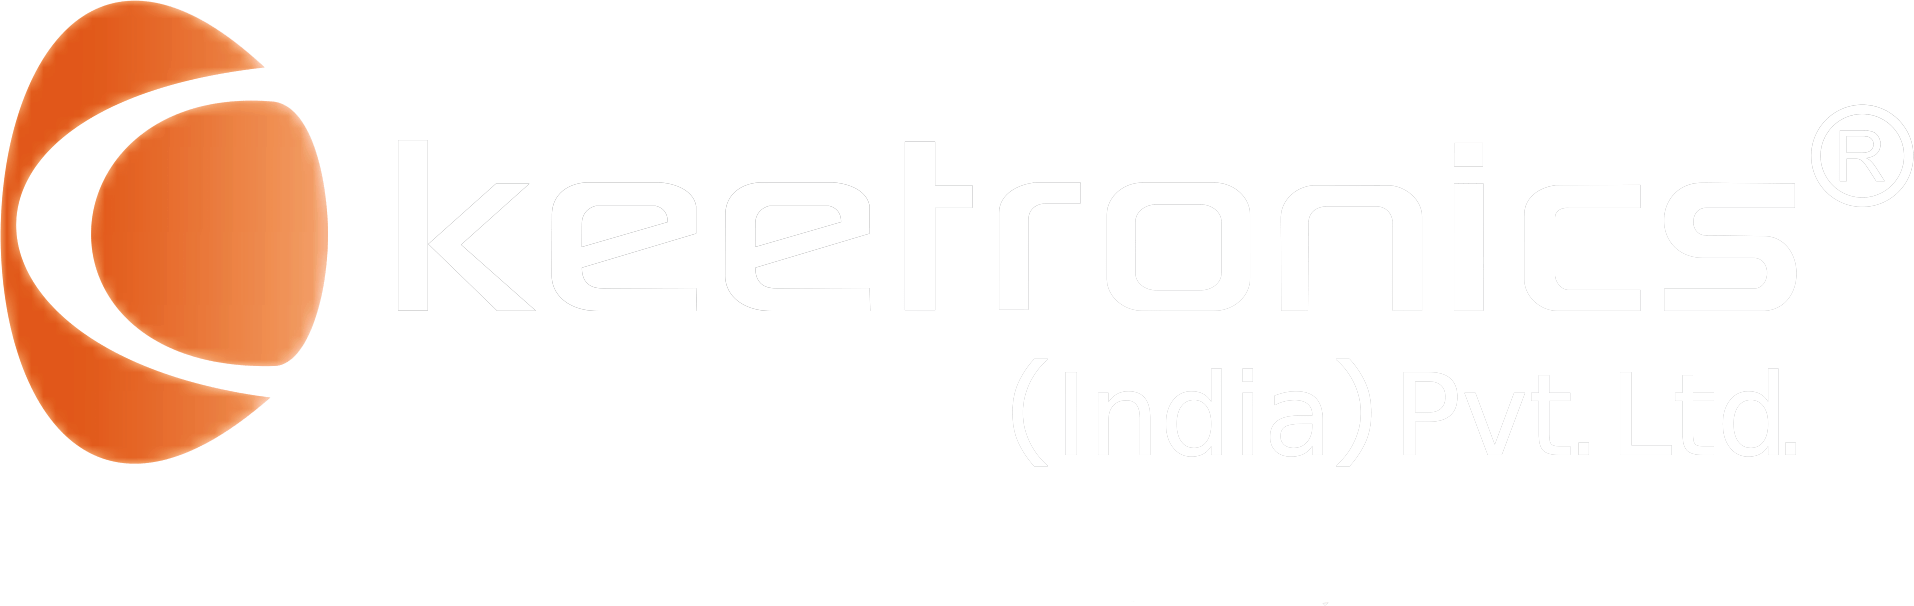 keetronics-logo-white